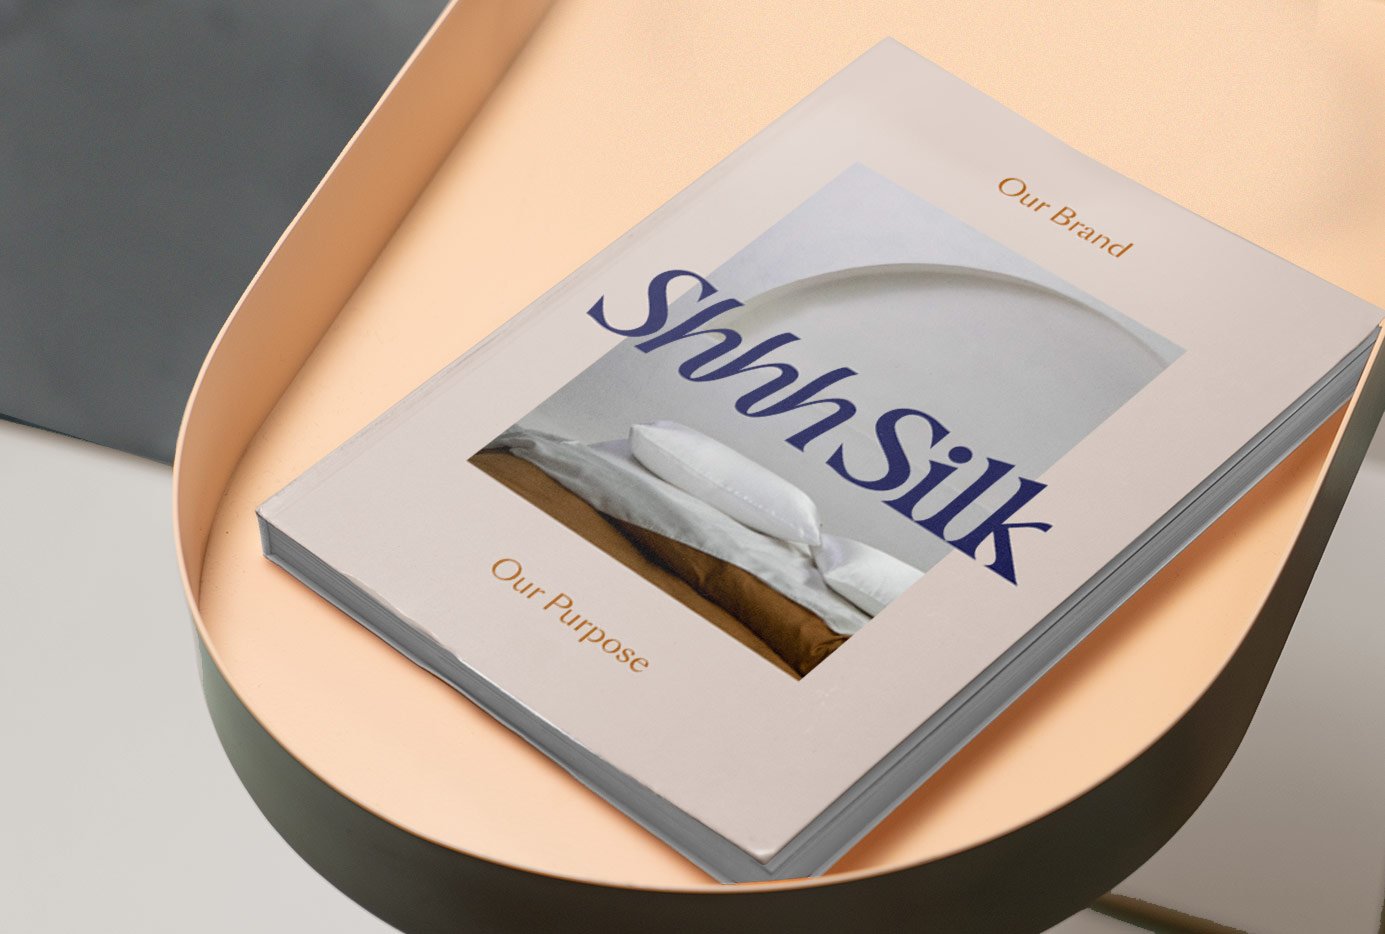 Shhh Silk Brand Book Design on Coffee Table